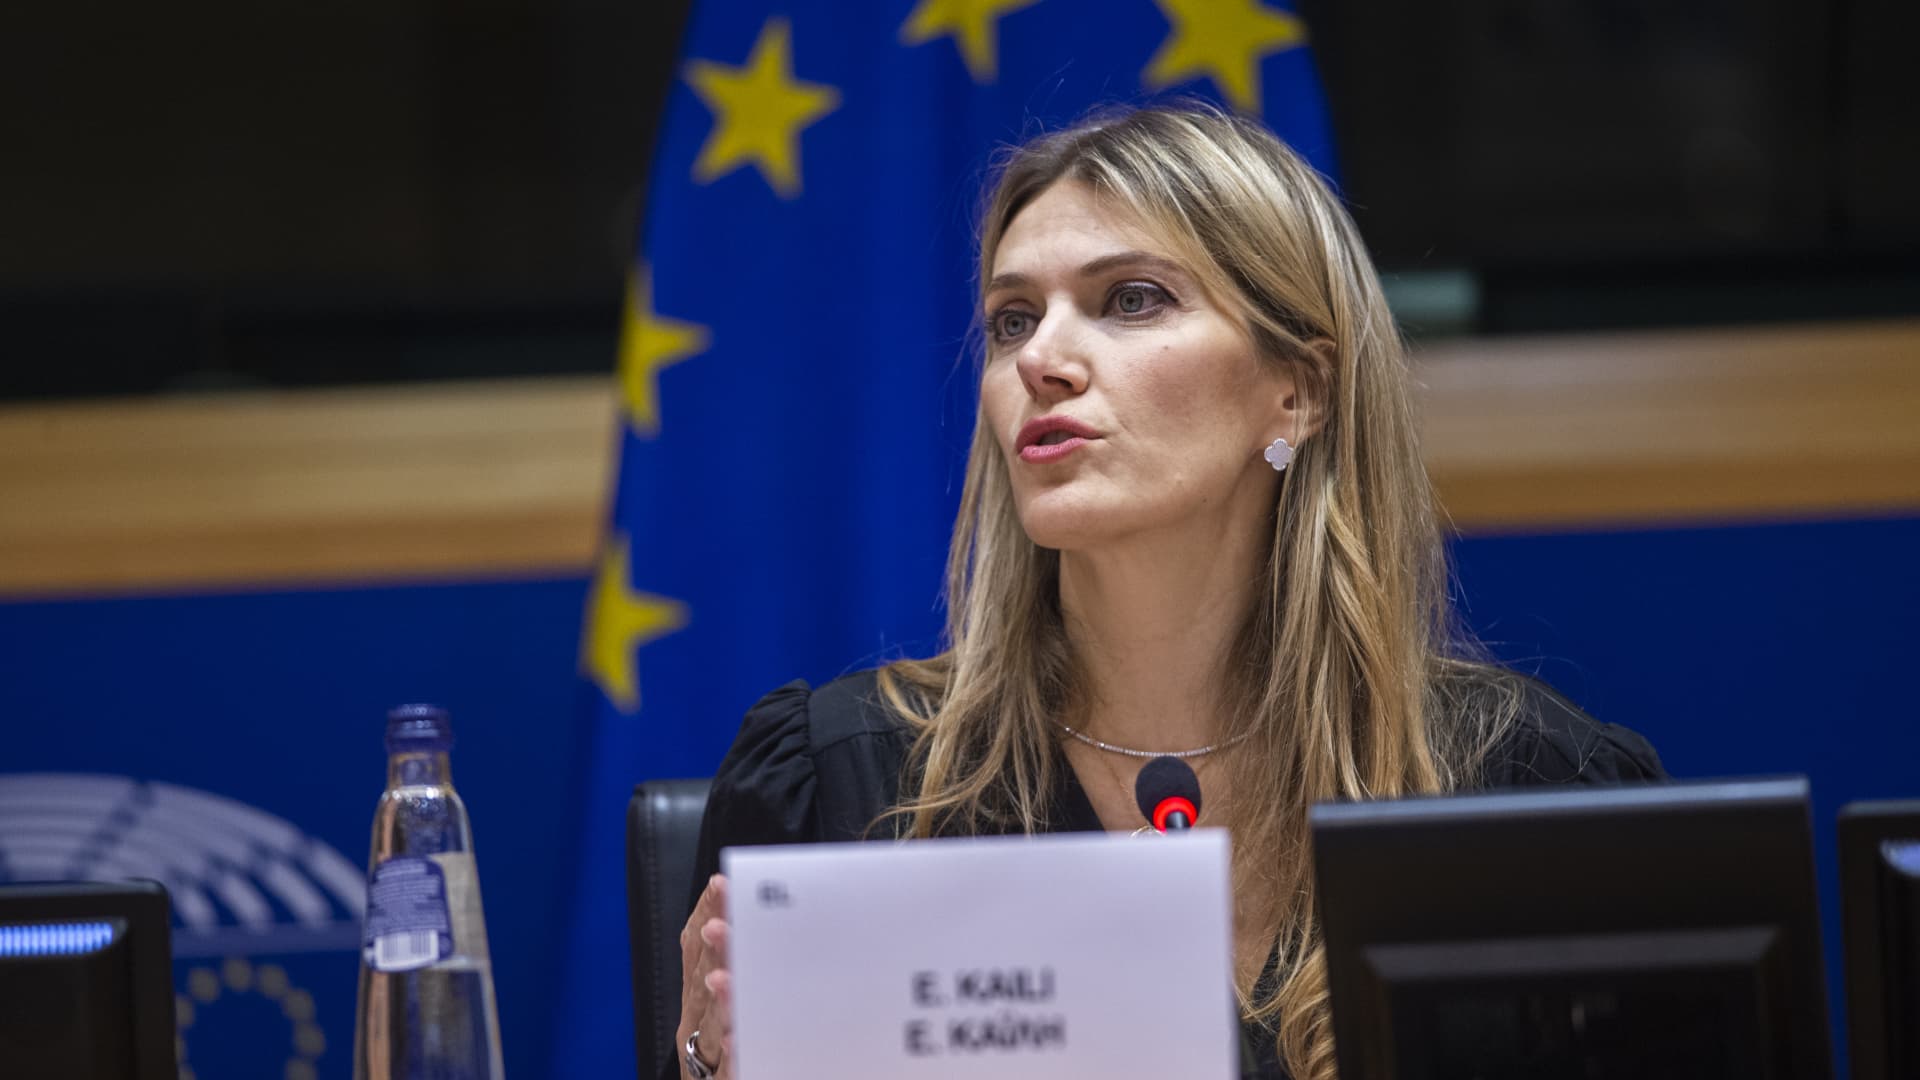 European Parliament removes Eva Kaili as vice-president after Qatar corruption allegations – CNBC